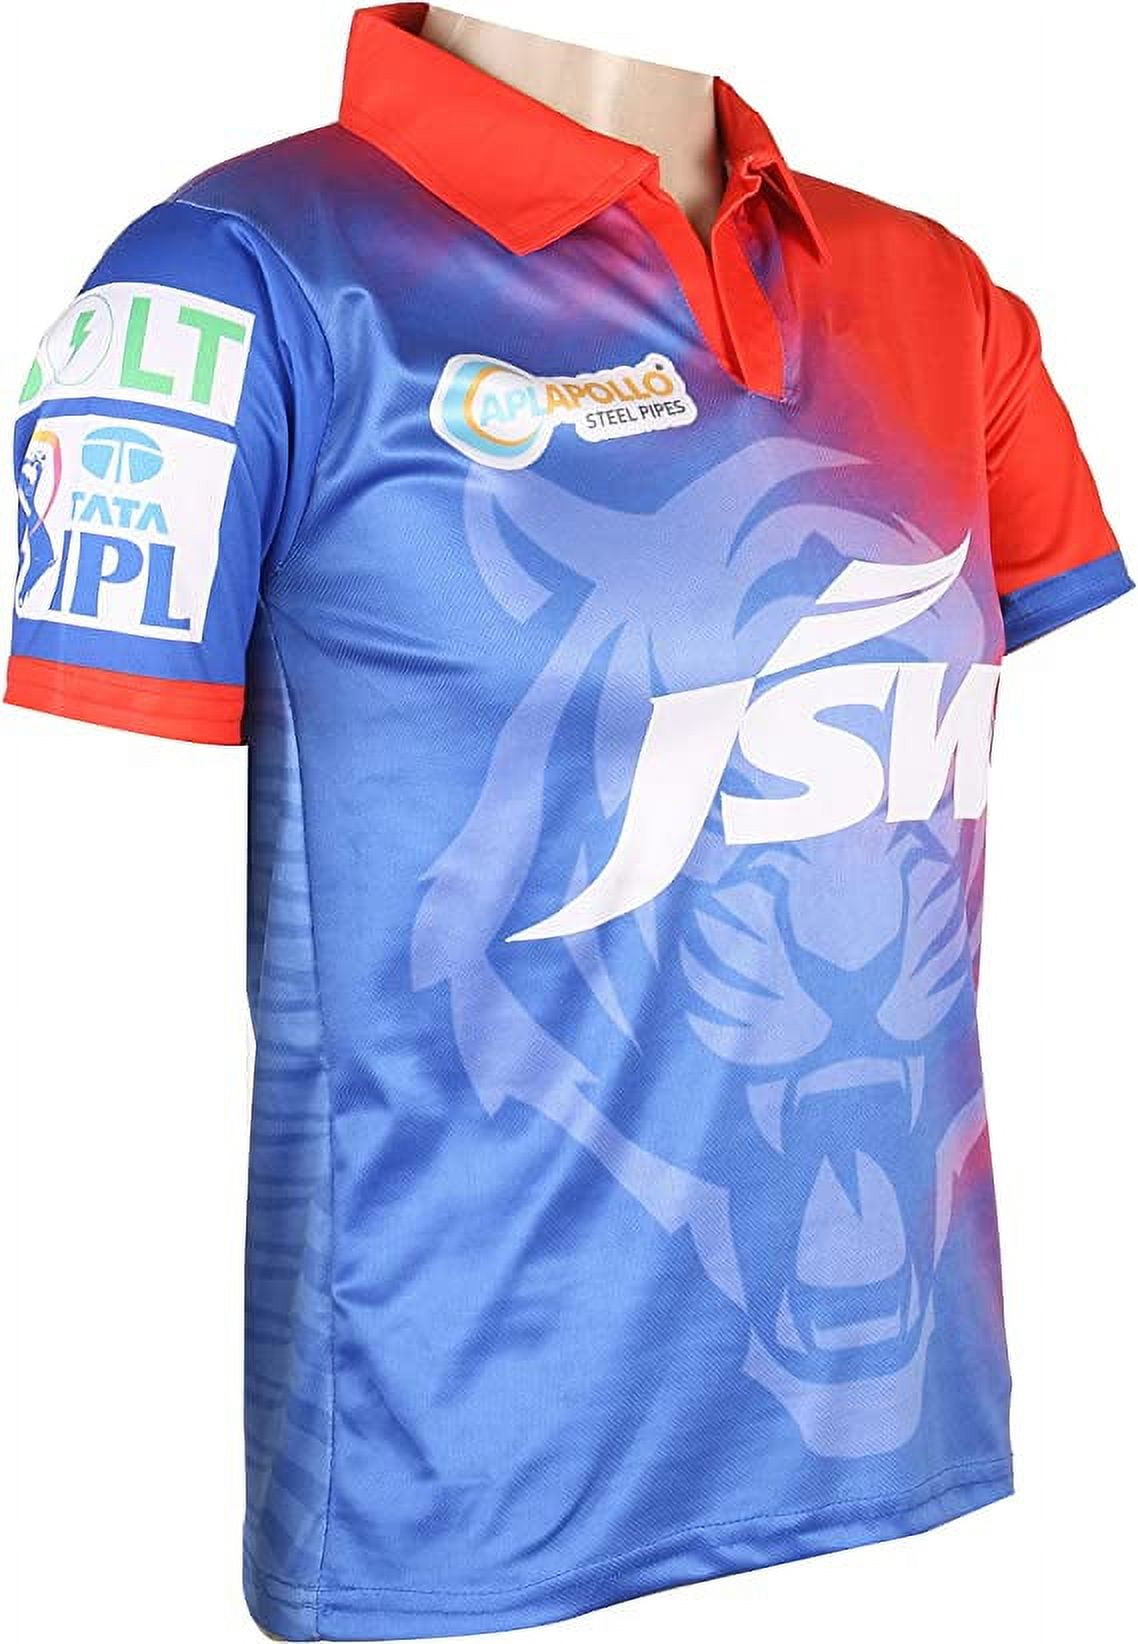 Buy GROWTALE Delhi Capitals 2022 IPL Jersey Half Sleeves (XX-Large, Blue)  at